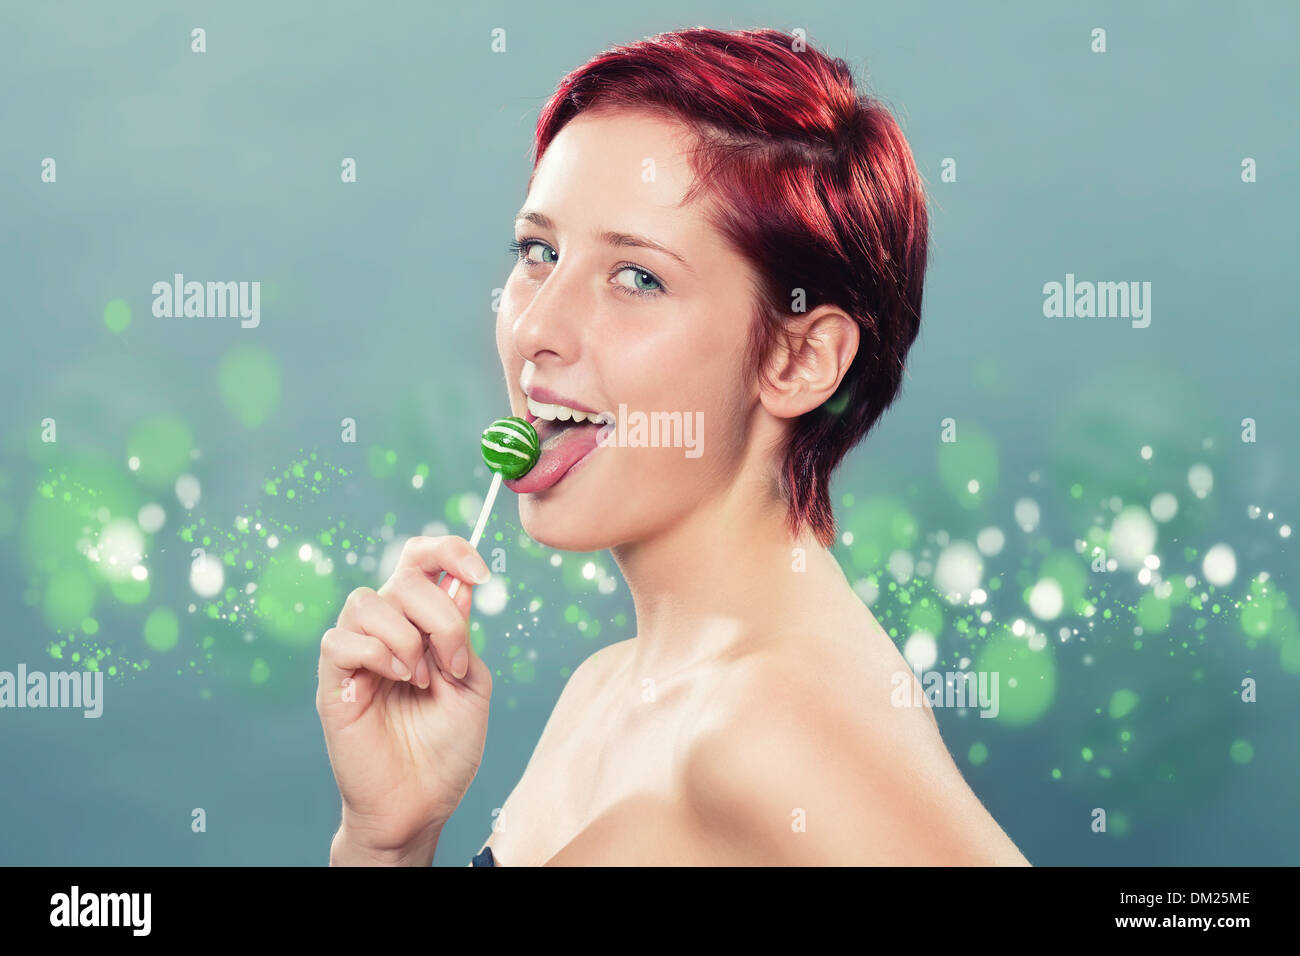 redhead woman licking a green lollipop Stock Photo